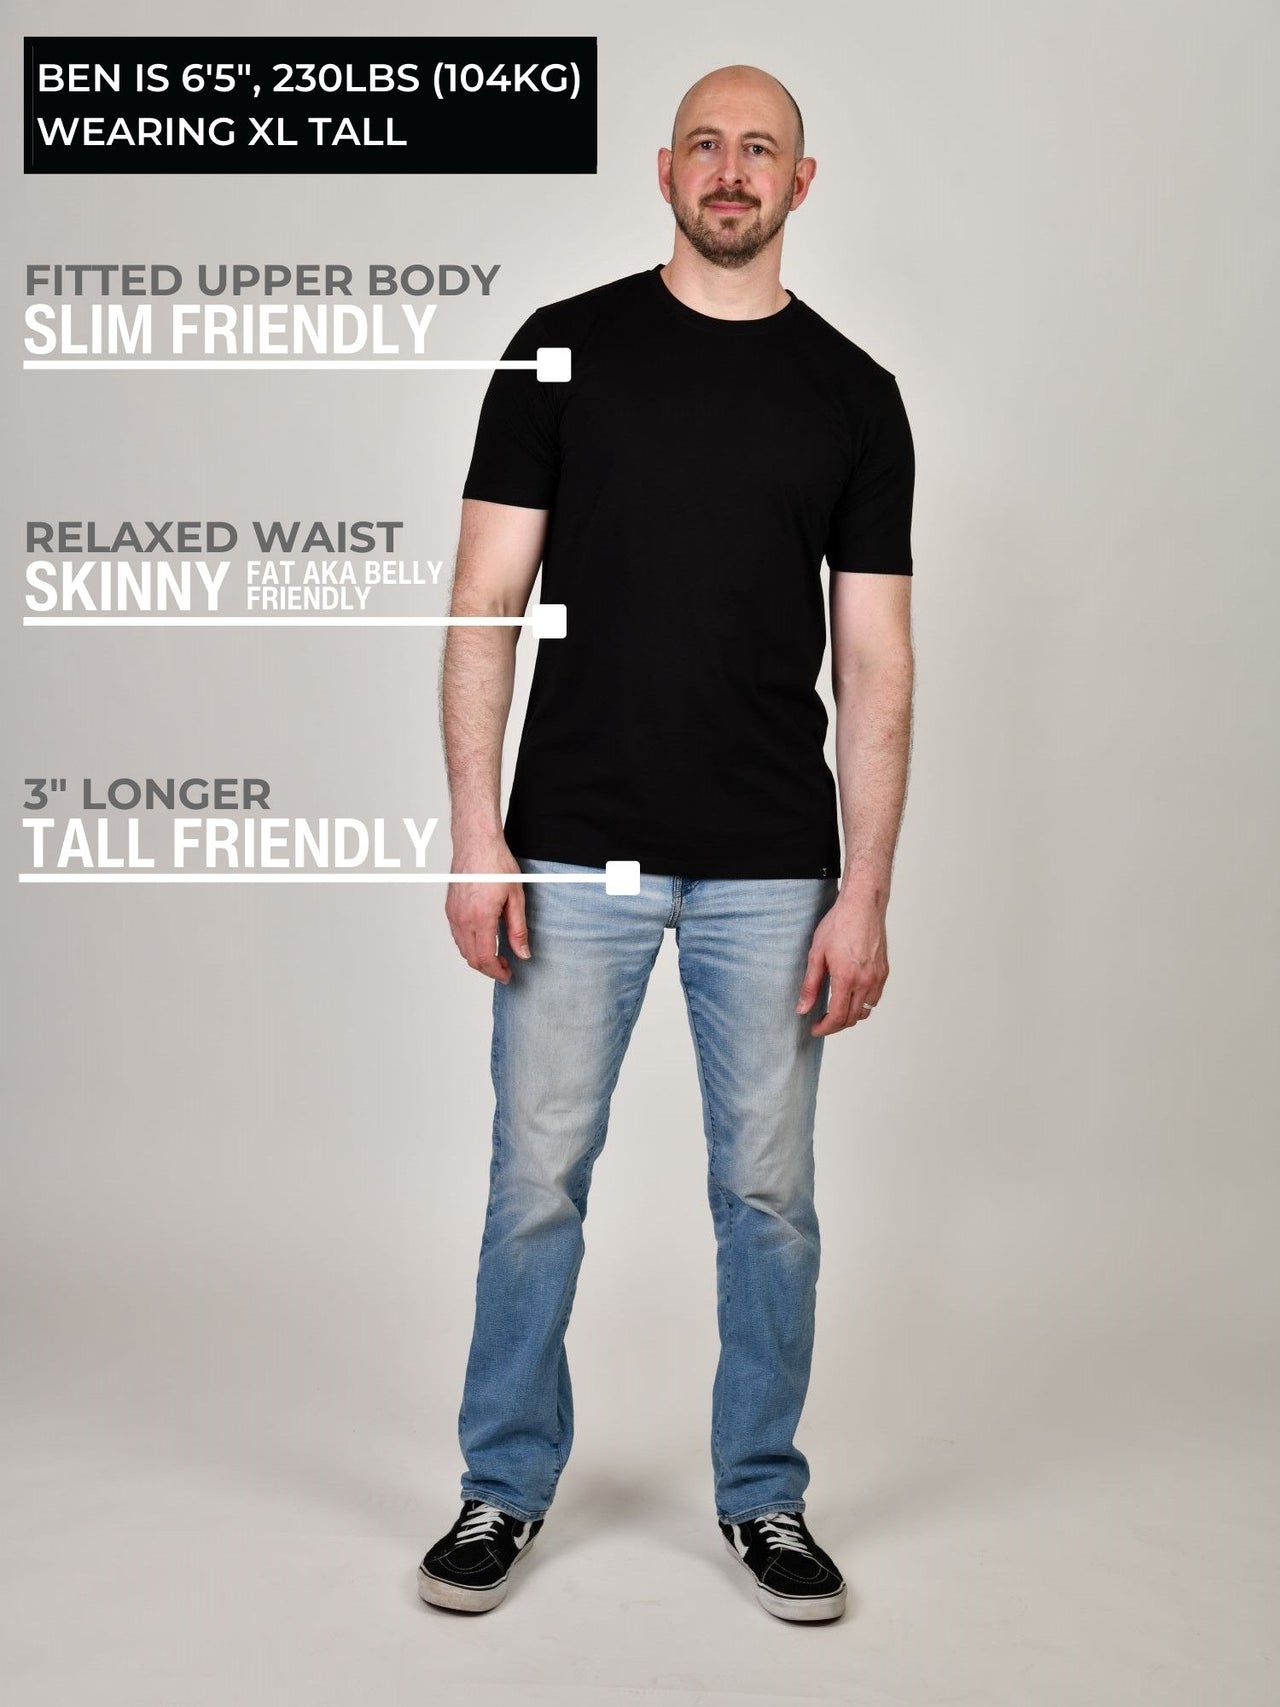 A head to toe shot of a tall muscular guy wearing a XL black tall t-shirt.